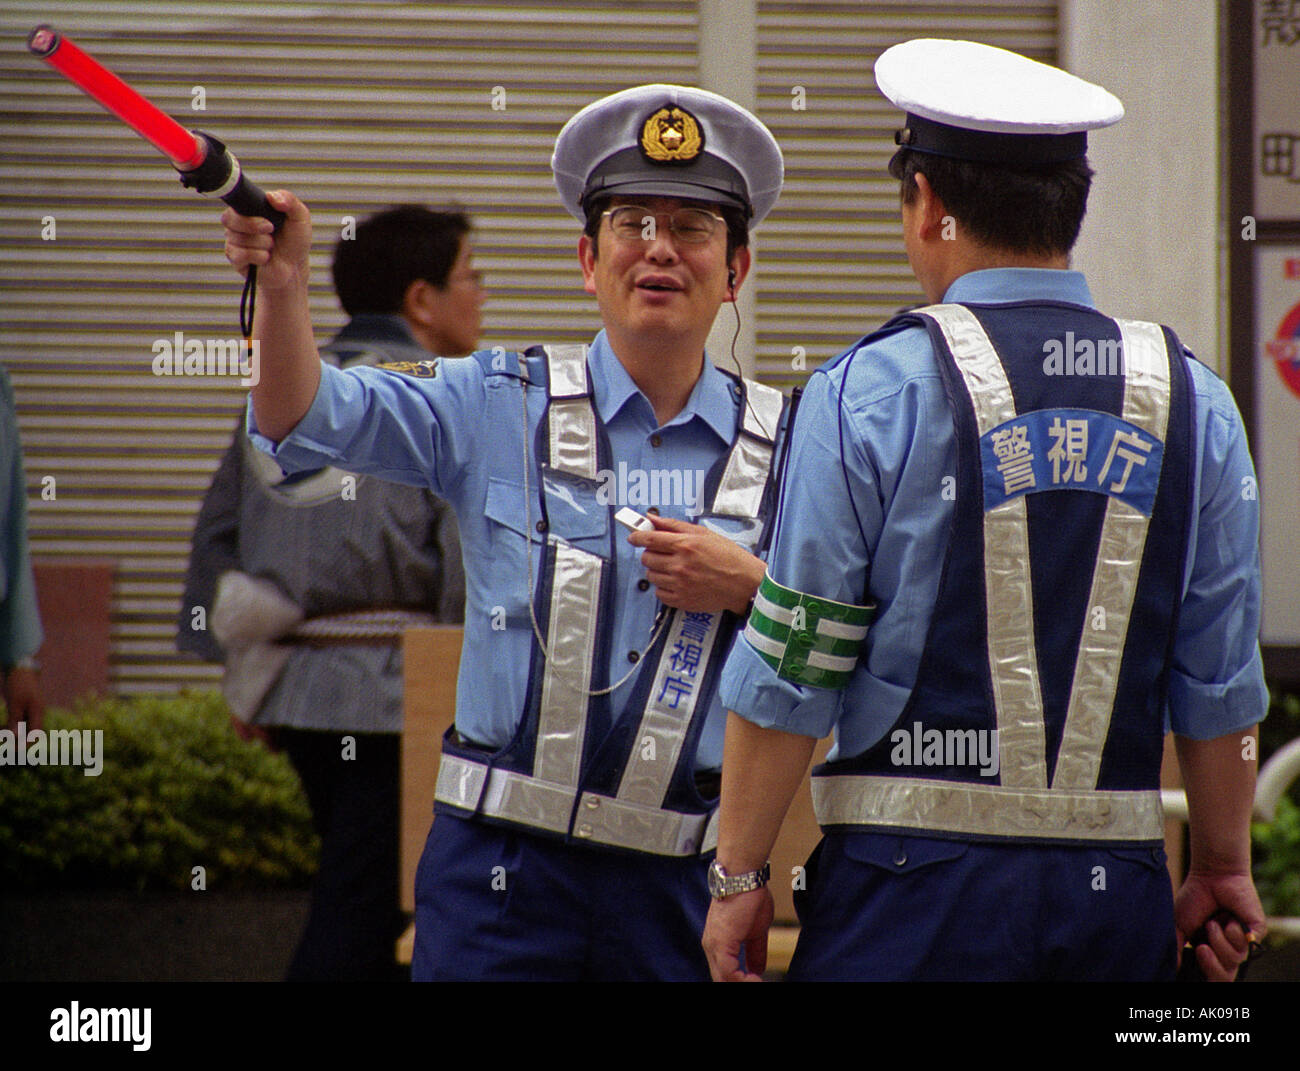 Stand policier paire posent une tradition rue guard hat point parler wrestle stick earphone Tokyo Japon Asie Orientale Banque D'Images